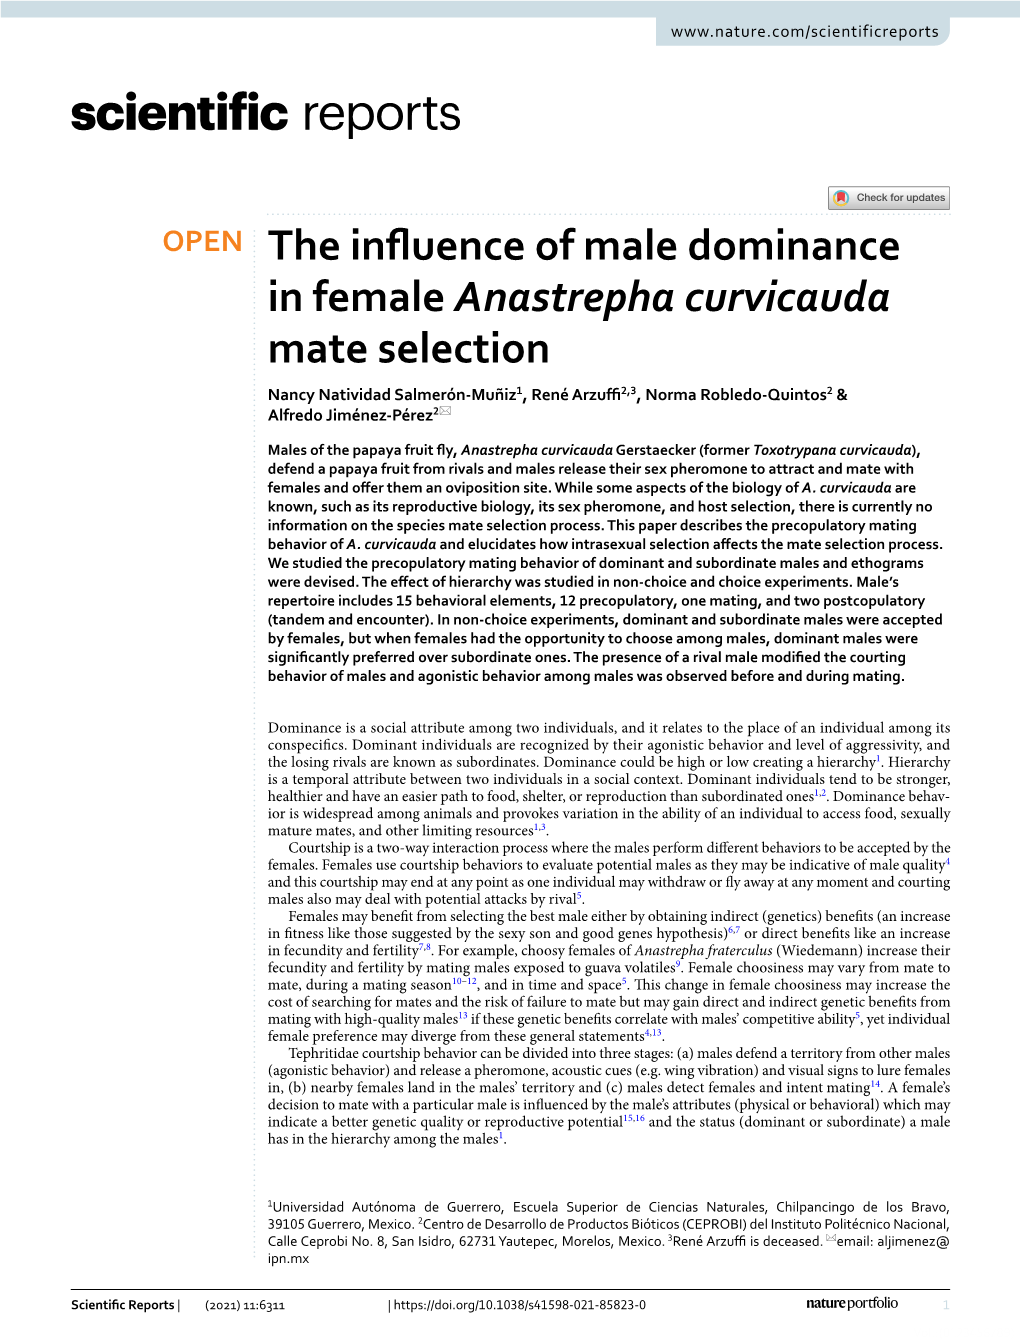 The Influence of Male Dominance in Female Anastrepha Curvicauda